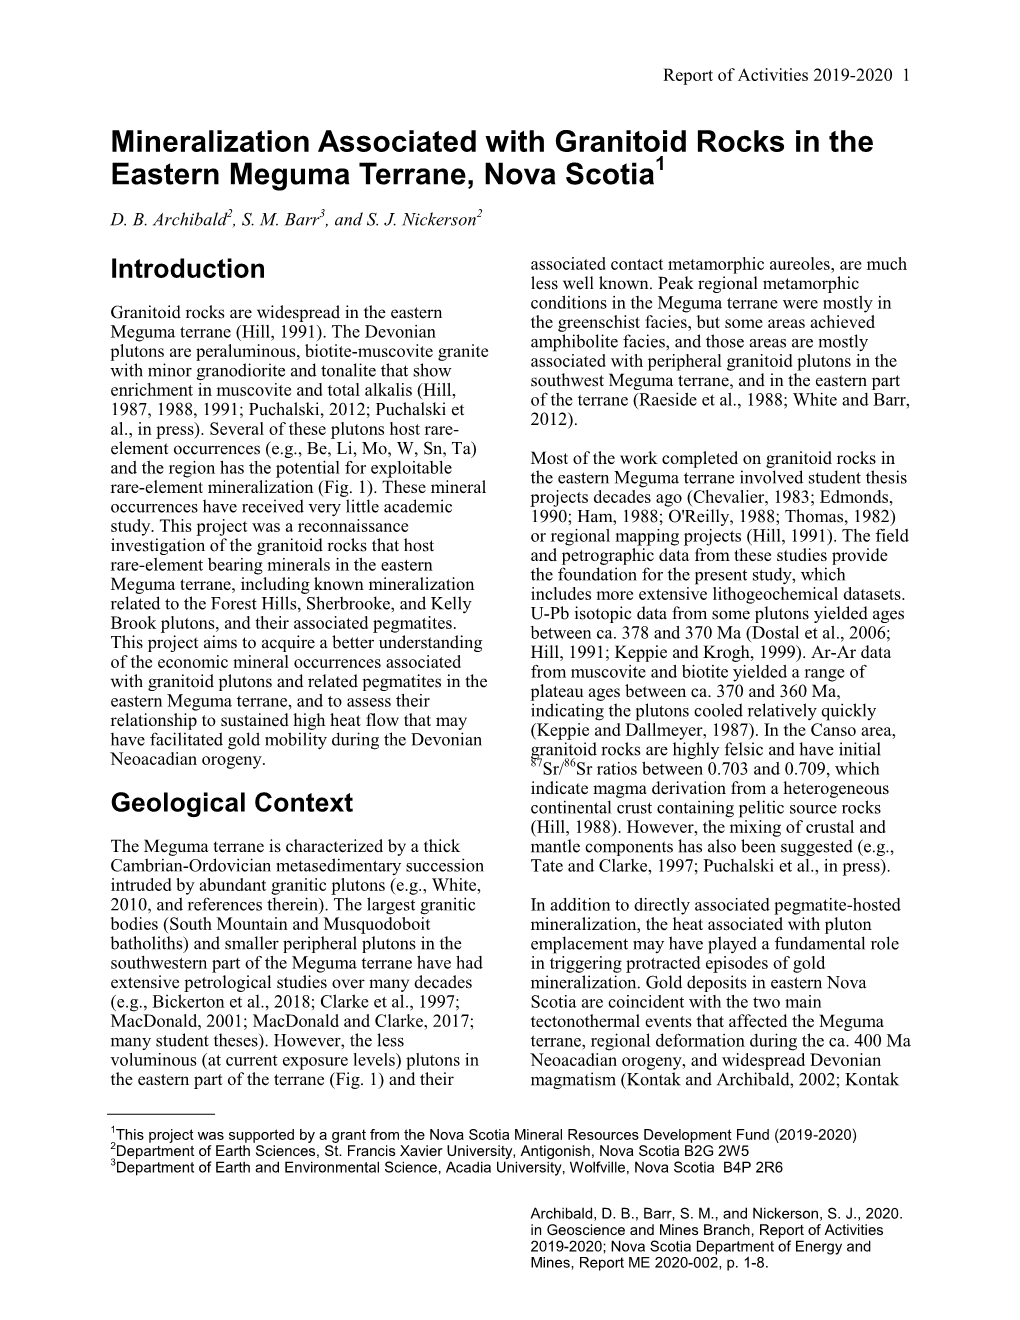 Mineralization Associated with Granitoid Rocks in the Eastern Meguma Terrane, Nova Scotia1